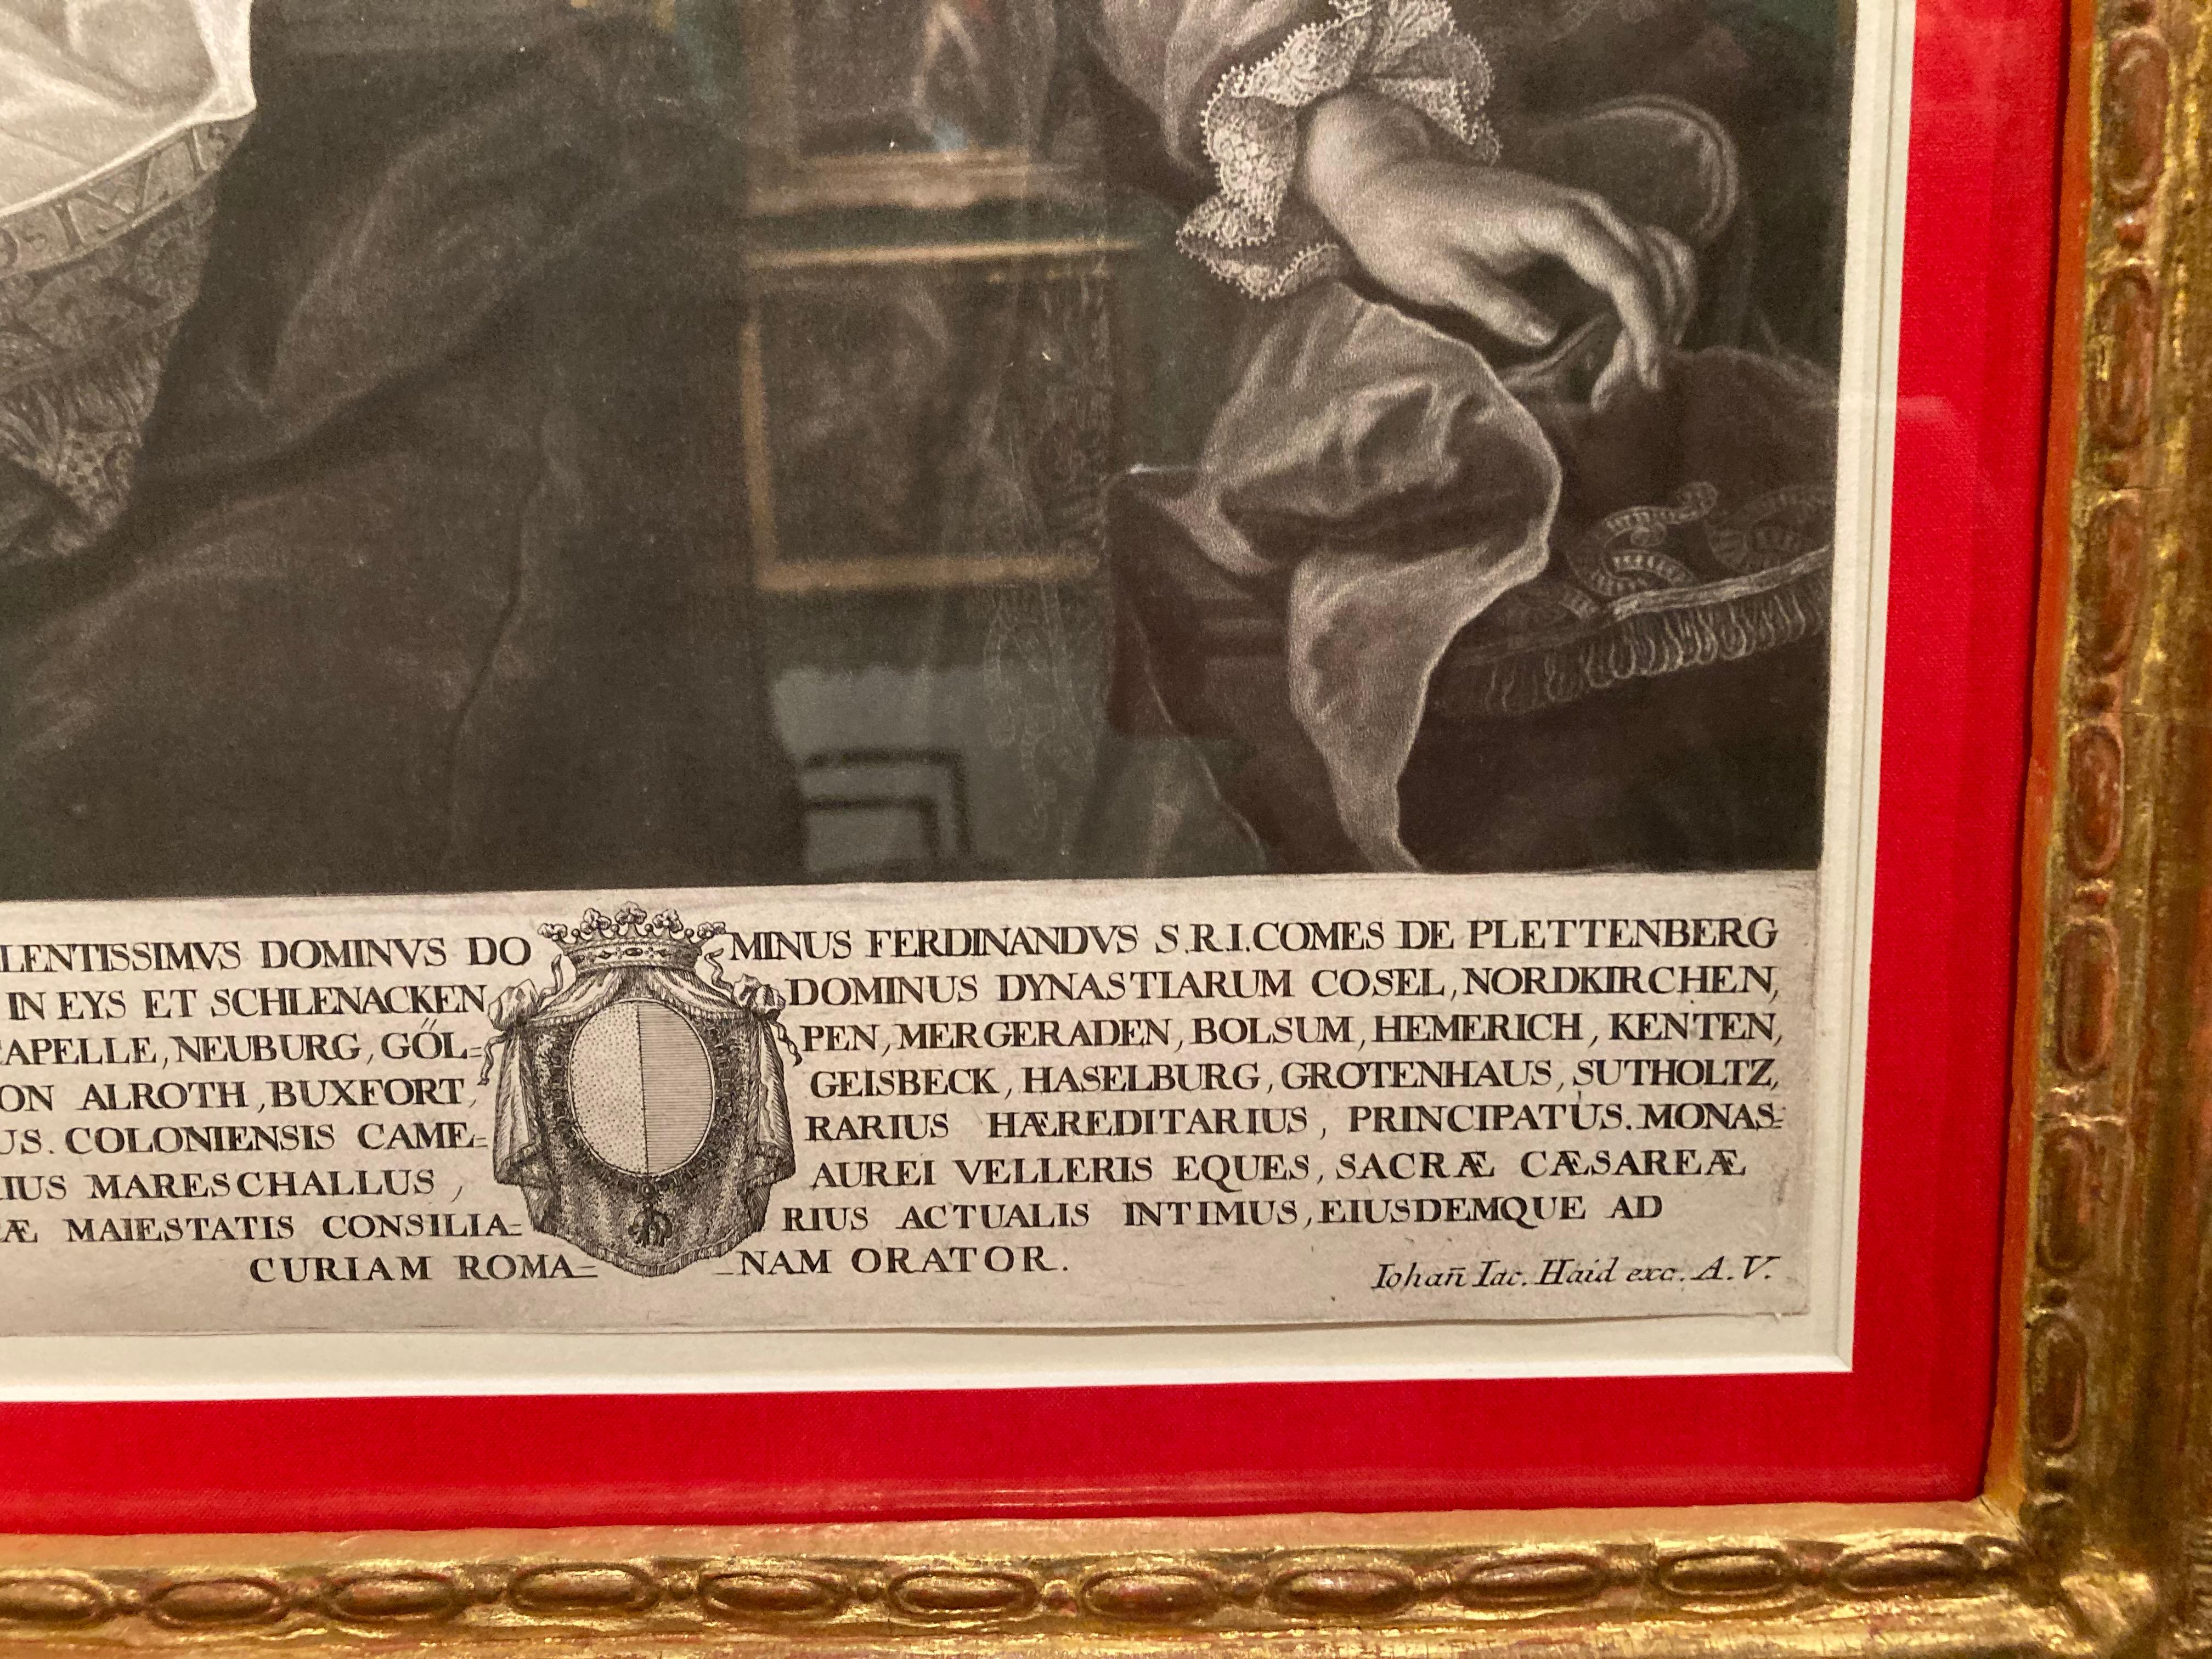 Johann Jakob Haid (1704-1767), engraver
Johann Stenglin (1715-1770), engraver
Martin van Meytens (1695-1770), inventor
Ferdinand Count of Plettenberg (1690-1737) as a Knight of the Order of the Golden Fleece
around 1736/1737Paper mezzotint
Height: